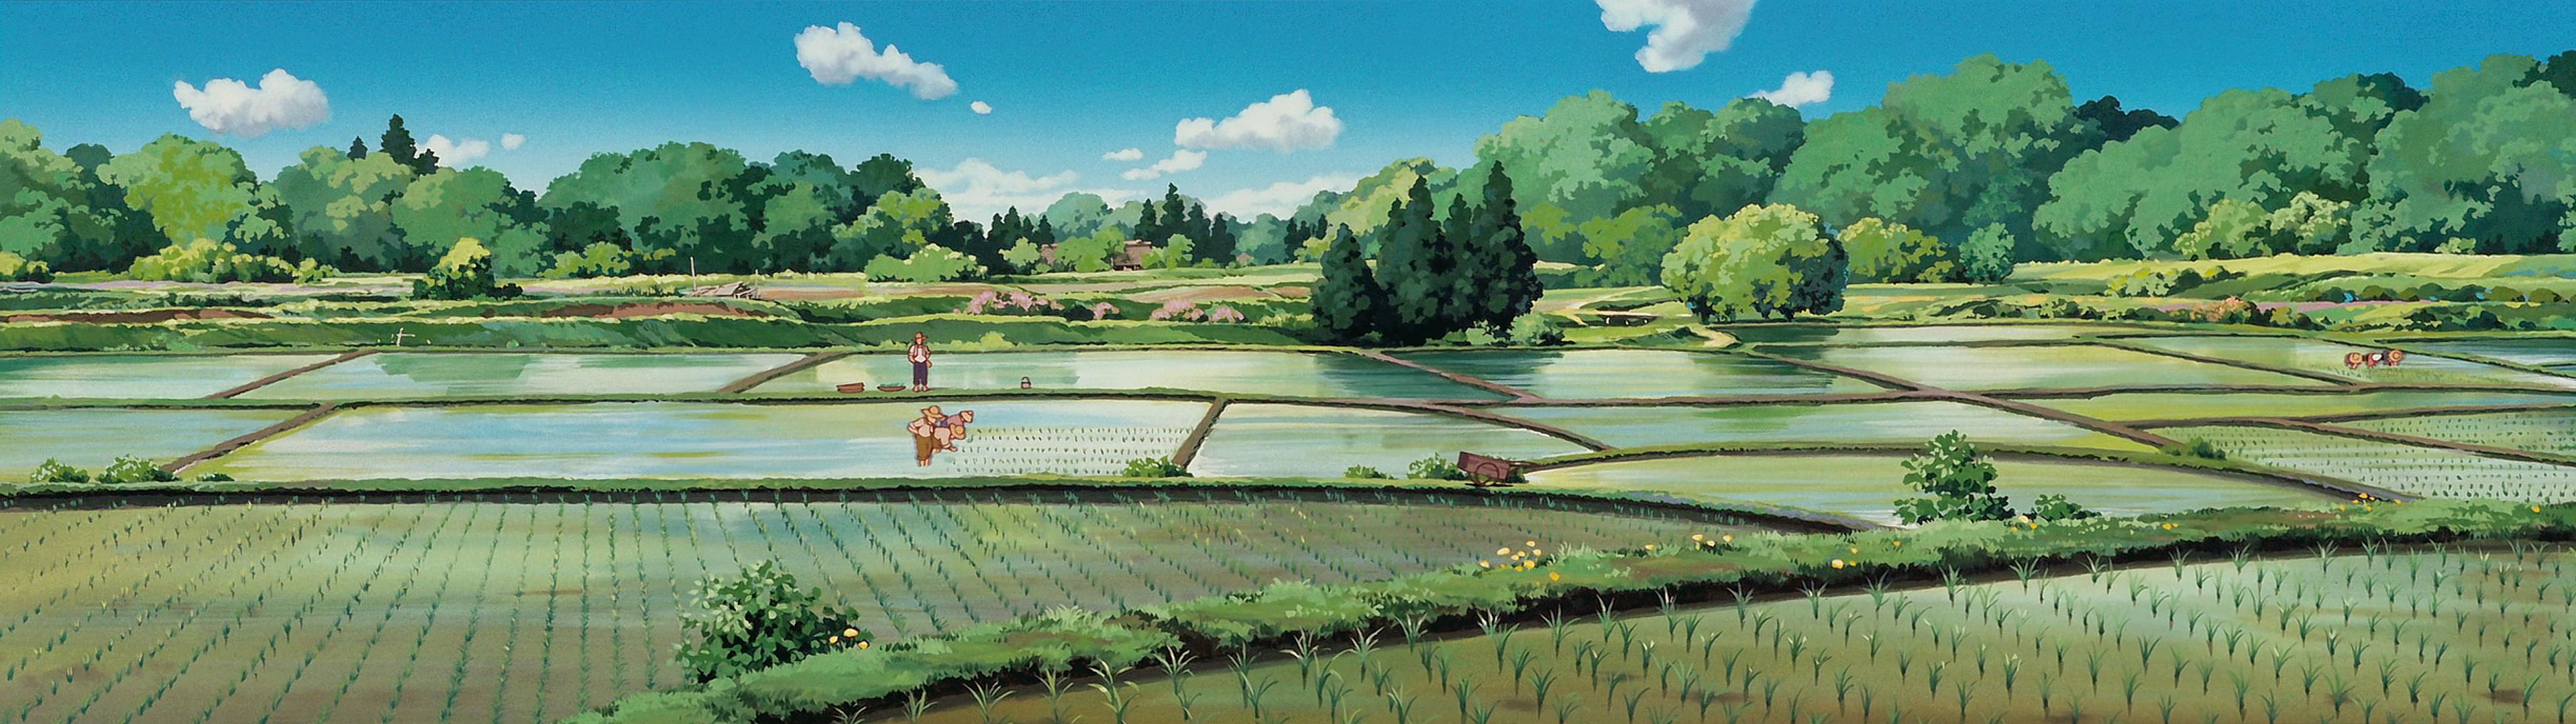 Ghibli 3840 x 1080 - Album on Imgur